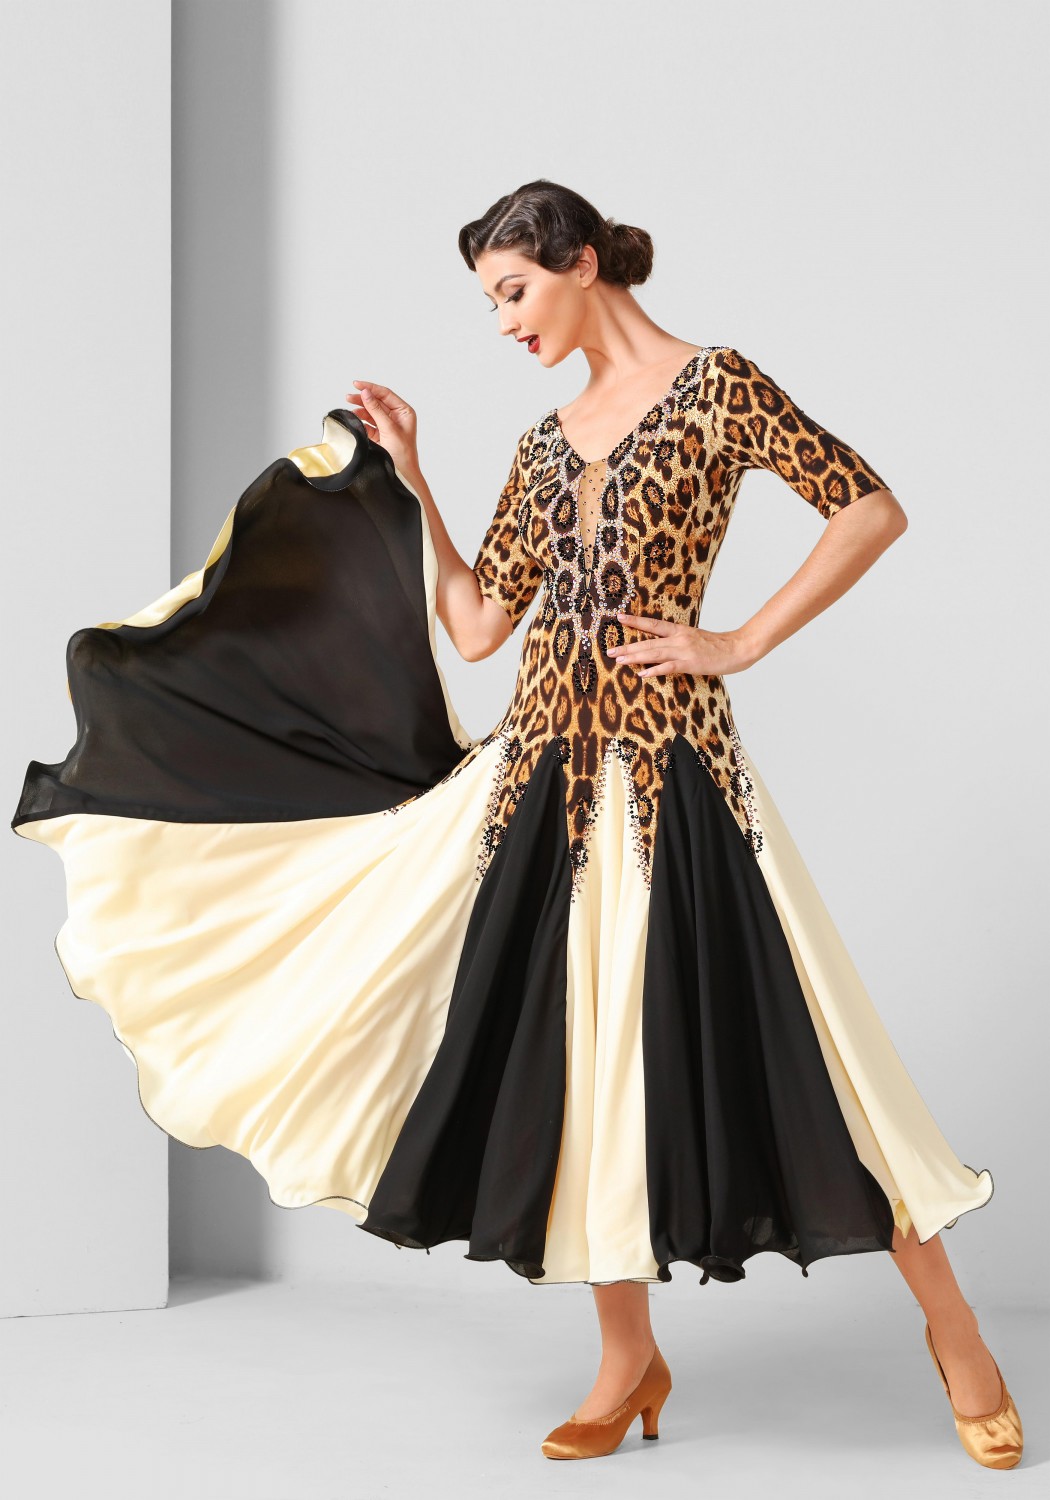 Leopard Two-tone Skirt Luxury Crepe Ballroom Smooth Practice Dance Dress